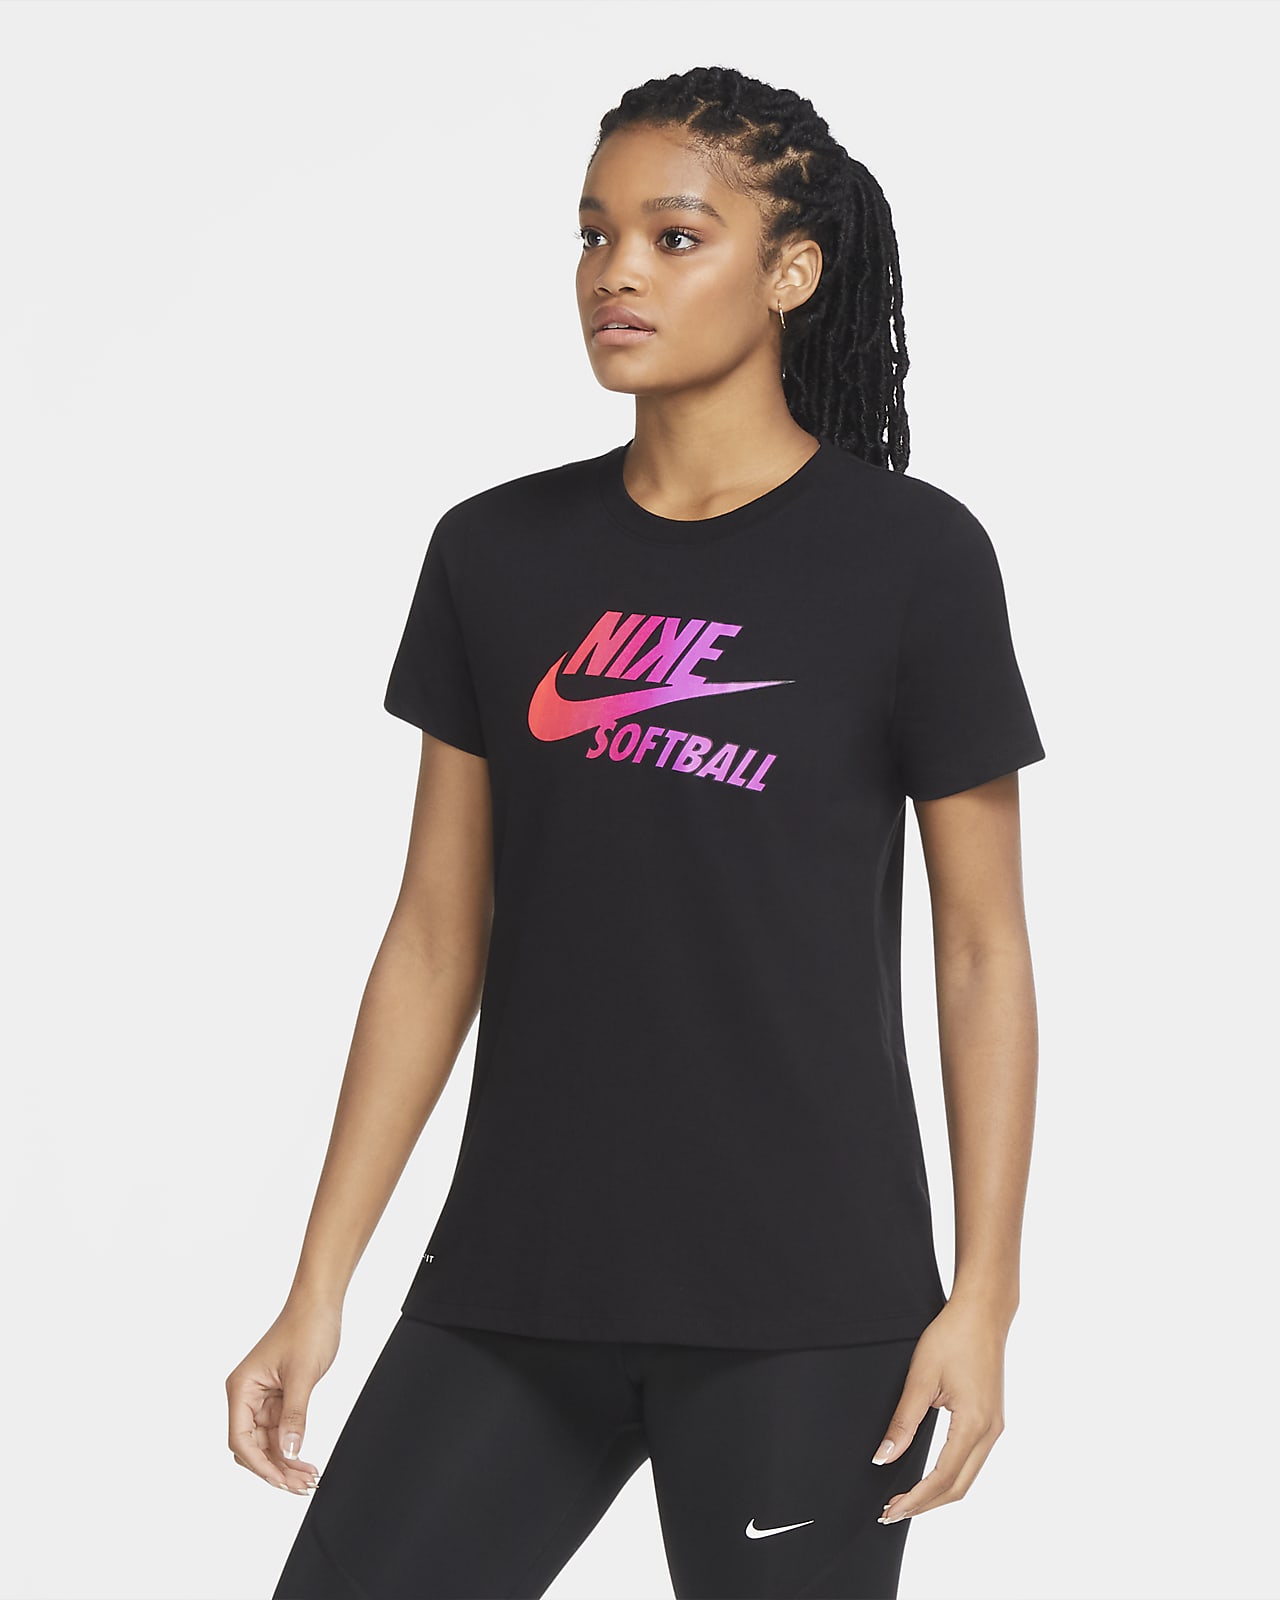 Nike Dri-FIT Women's Softball T-Shirt 